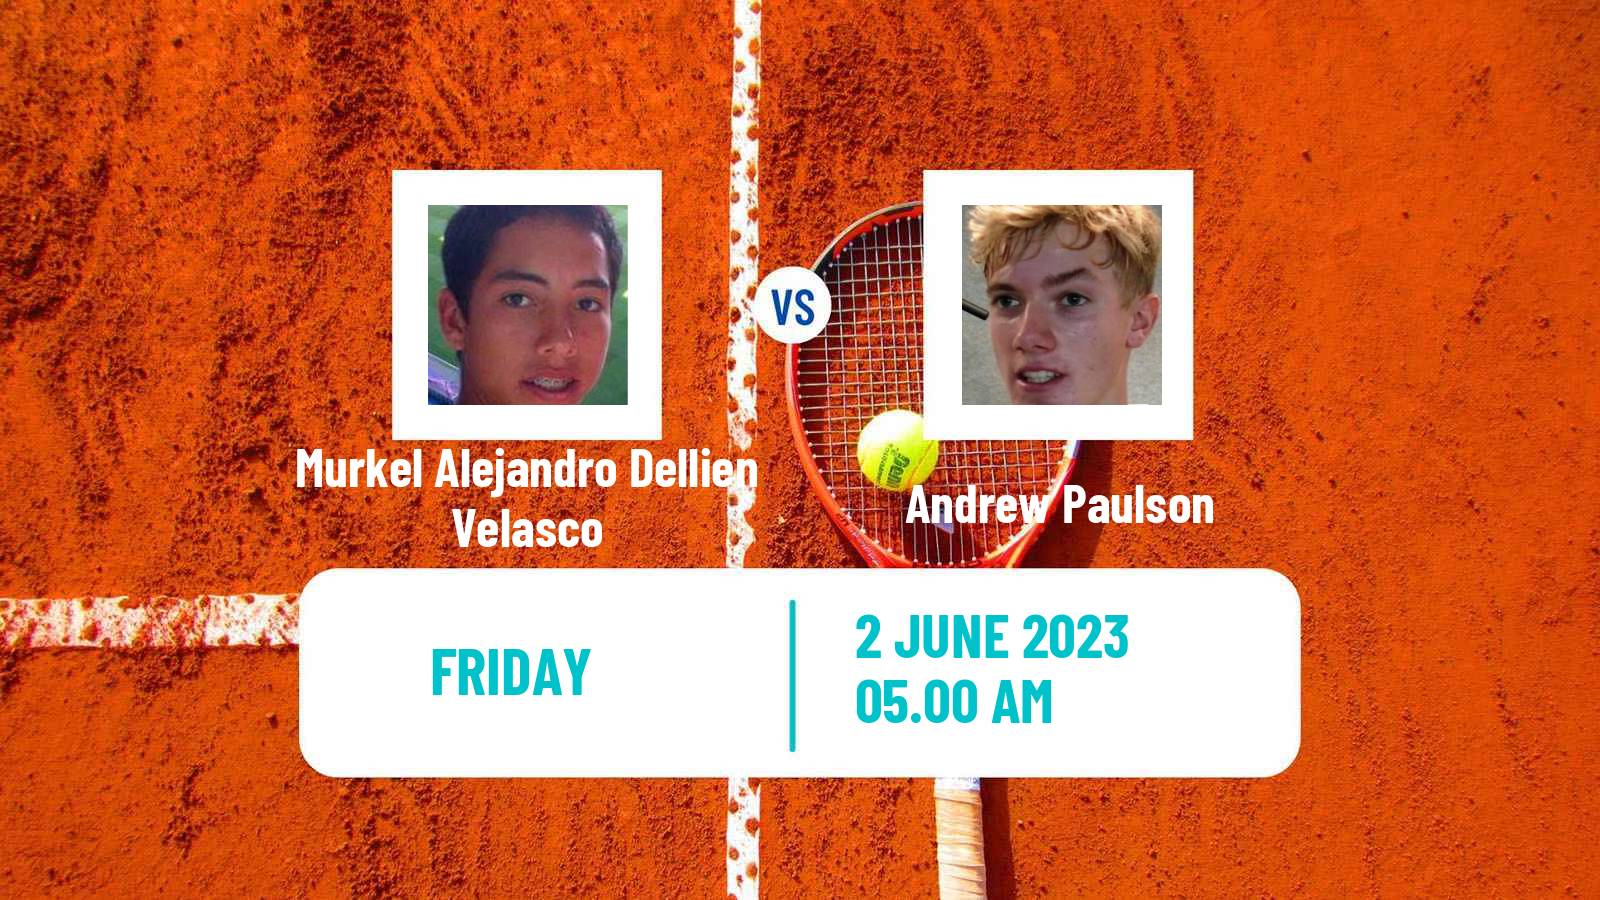 Tennis ITF M25 Jablonec Nad Nisou Men Murkel Alejandro Dellien Velasco - Andrew Paulson